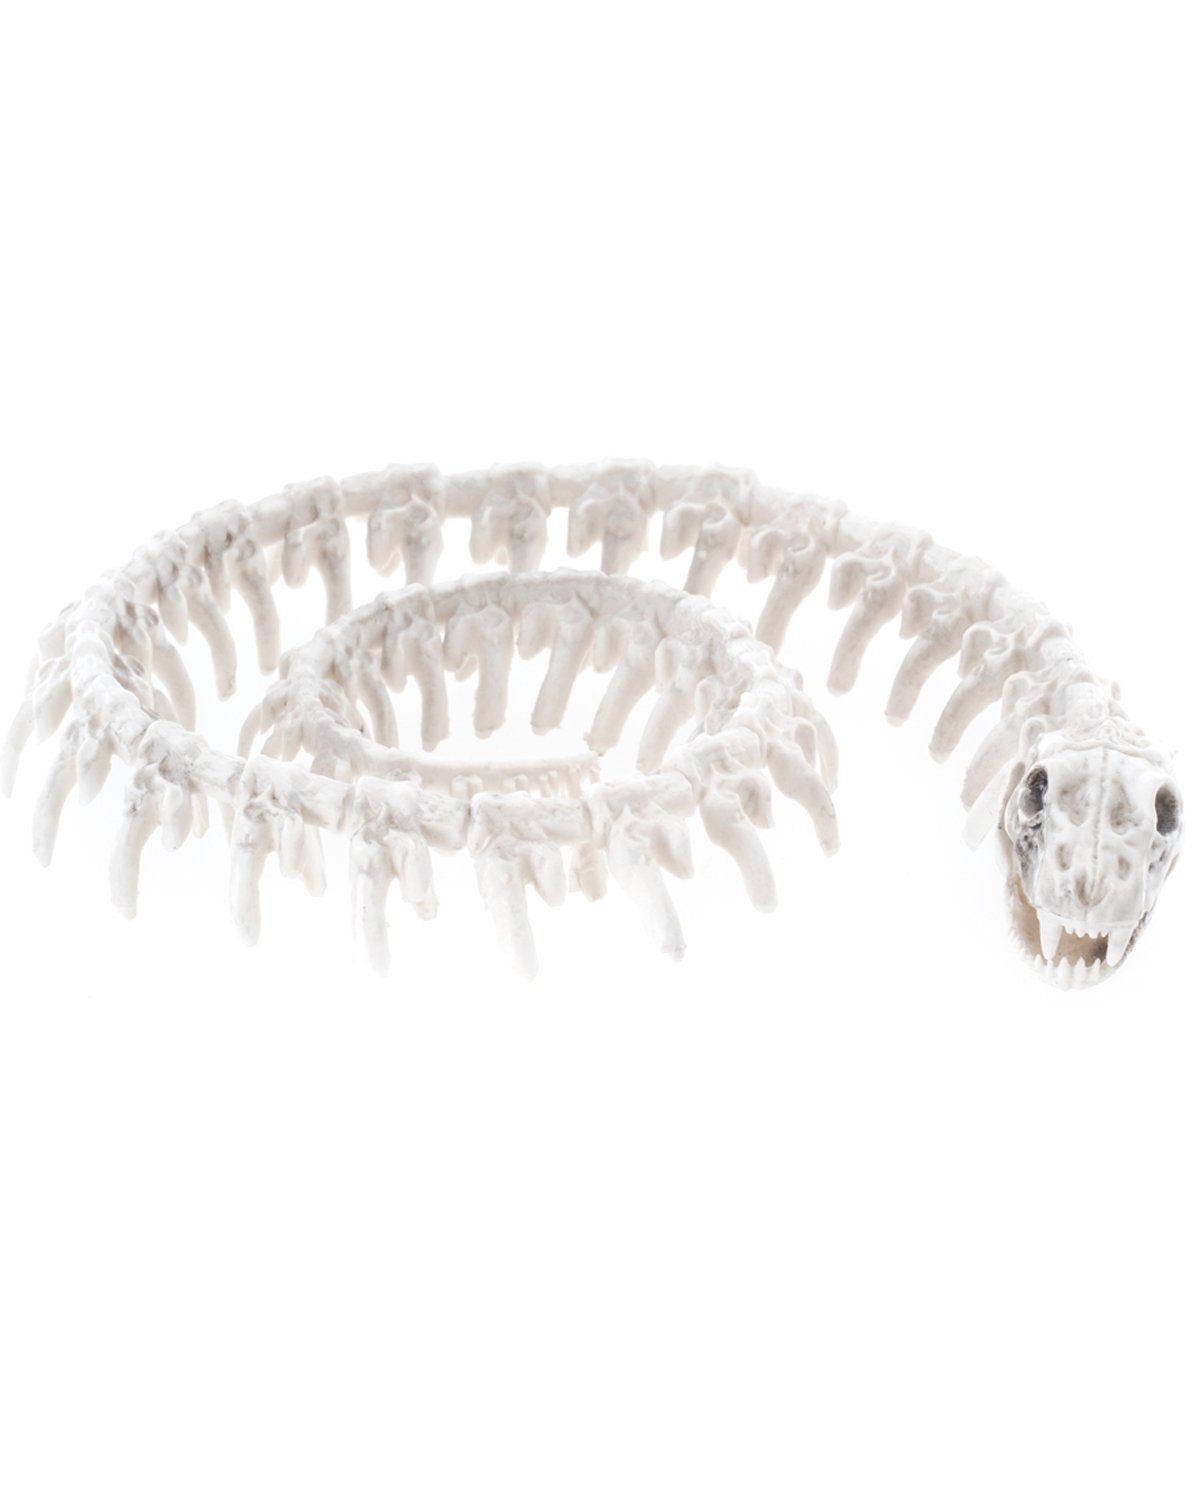 CHAKS Dekoobjekt Weißes Schlangen Skelett - 20 cm, Halloween Dekor